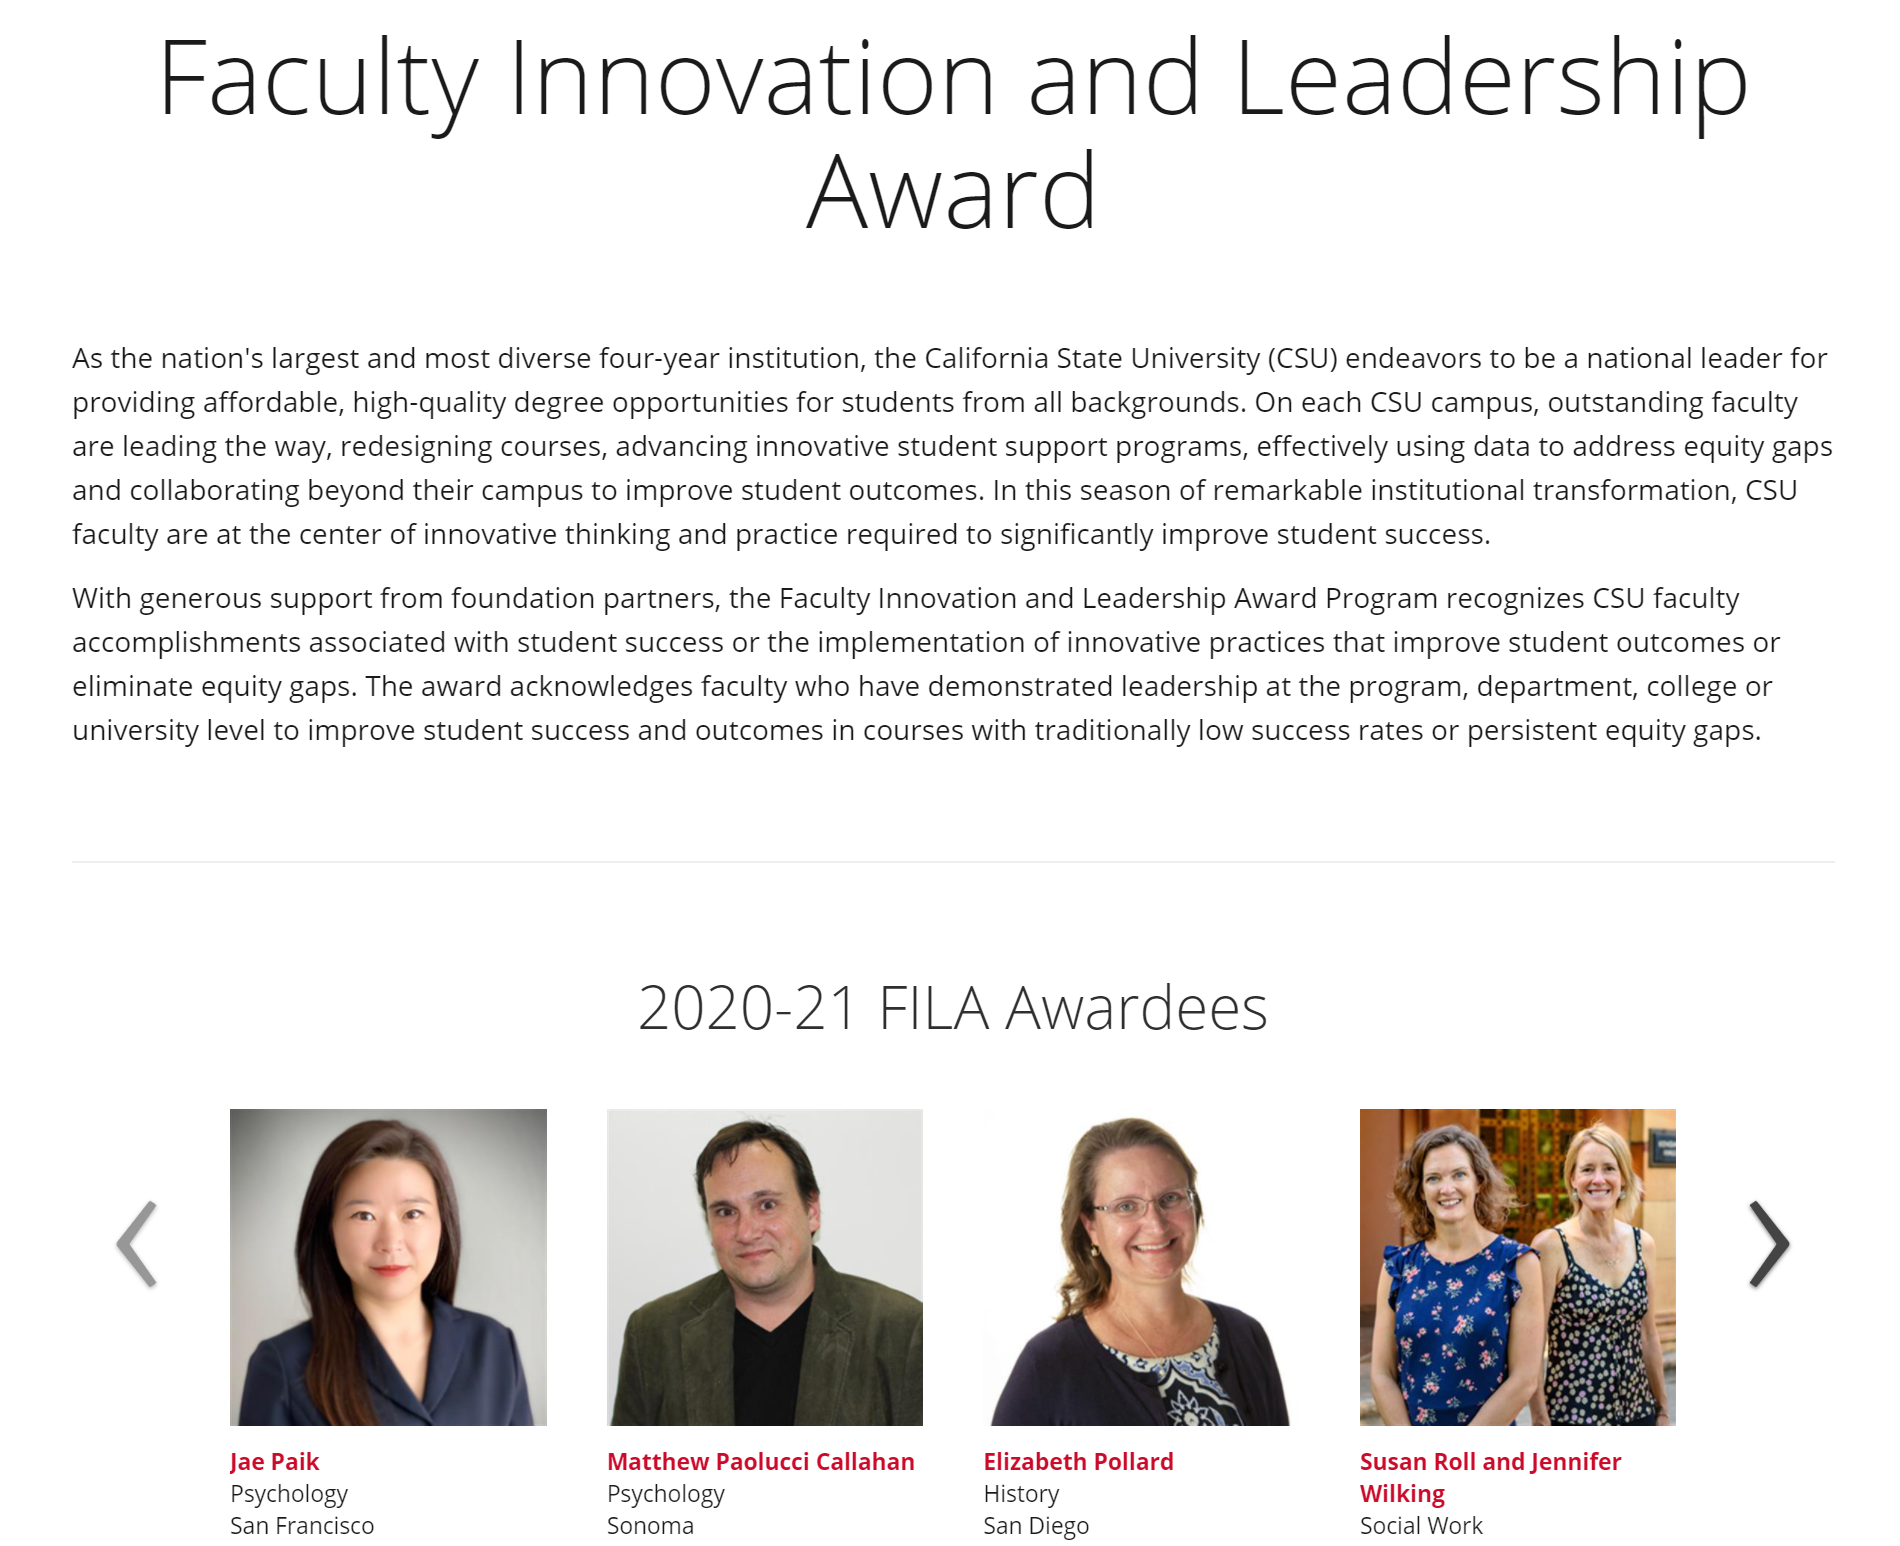 Faculty Innovation Award Description